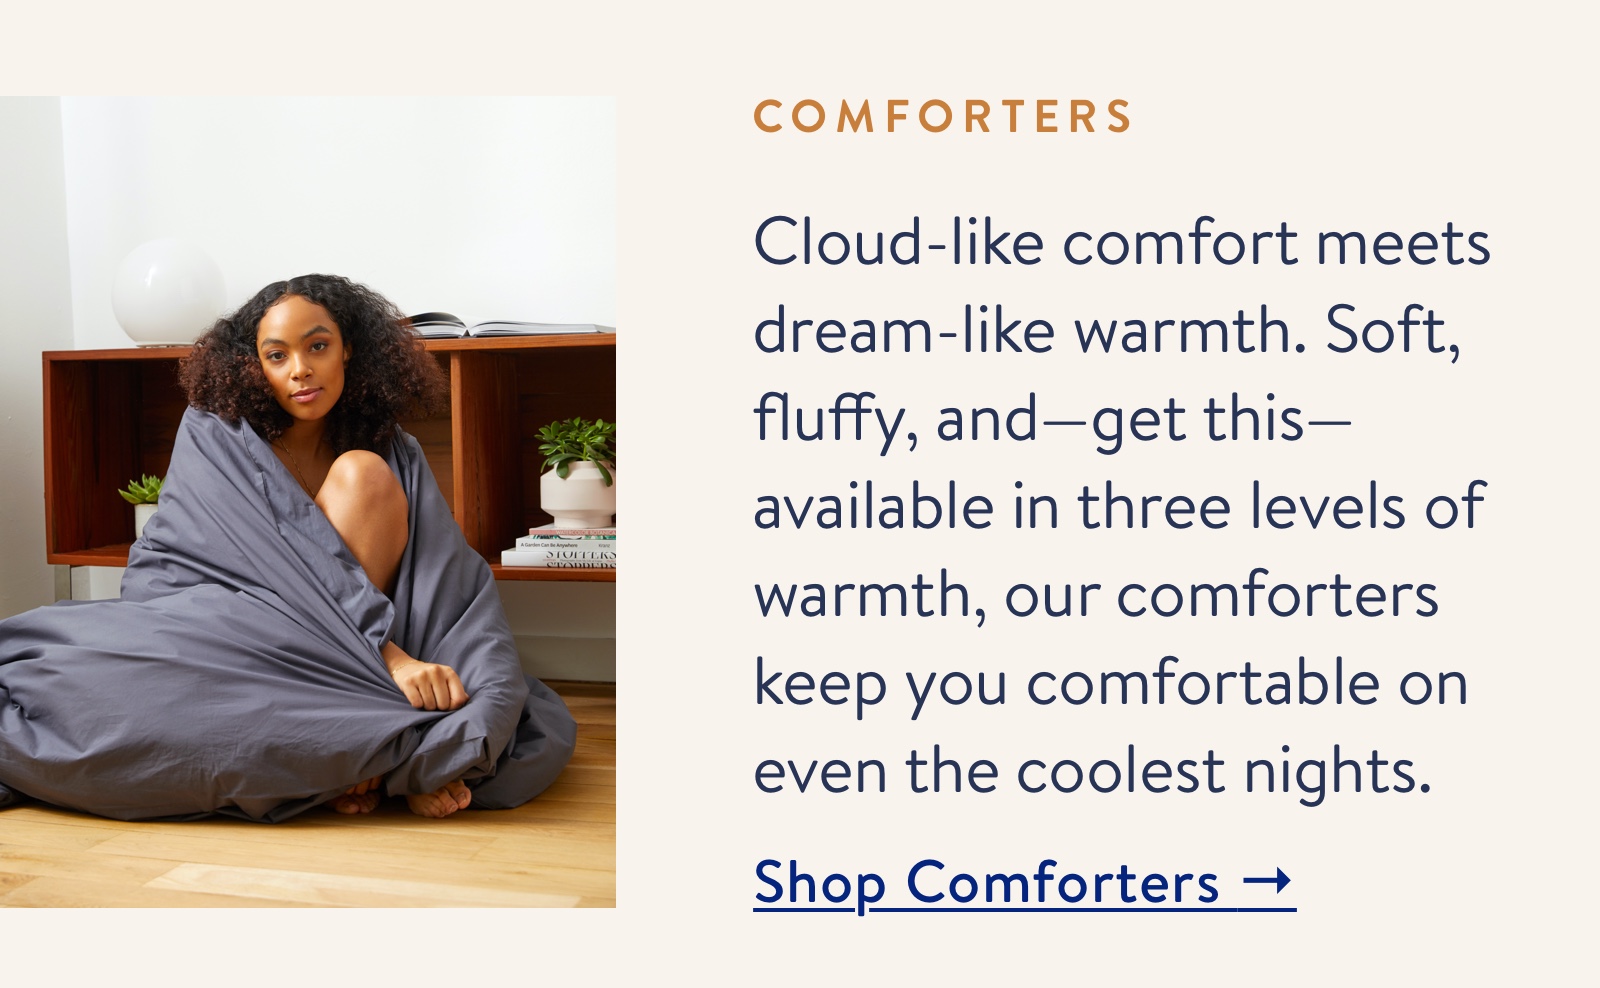 Cloud-like comfort meets dream-like warmth. Shop Comforters